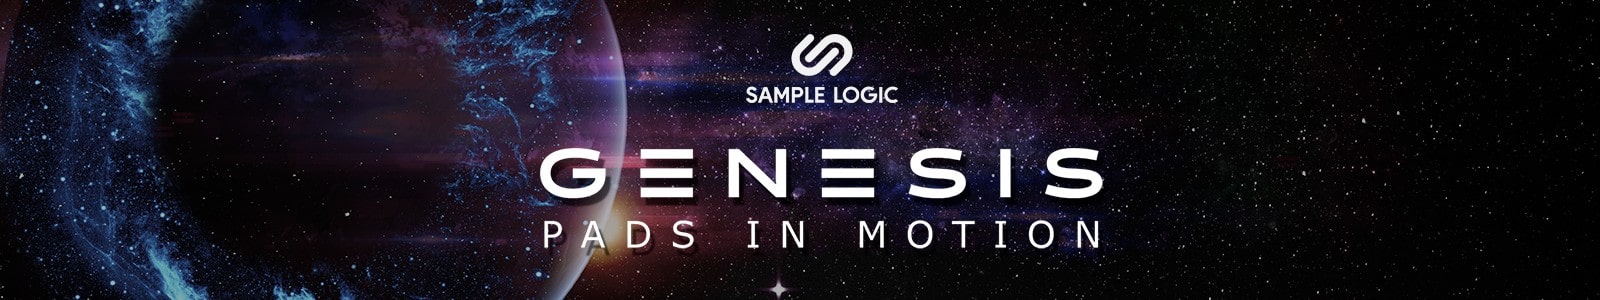 GENESIS Pads in Motion by Sample Logic